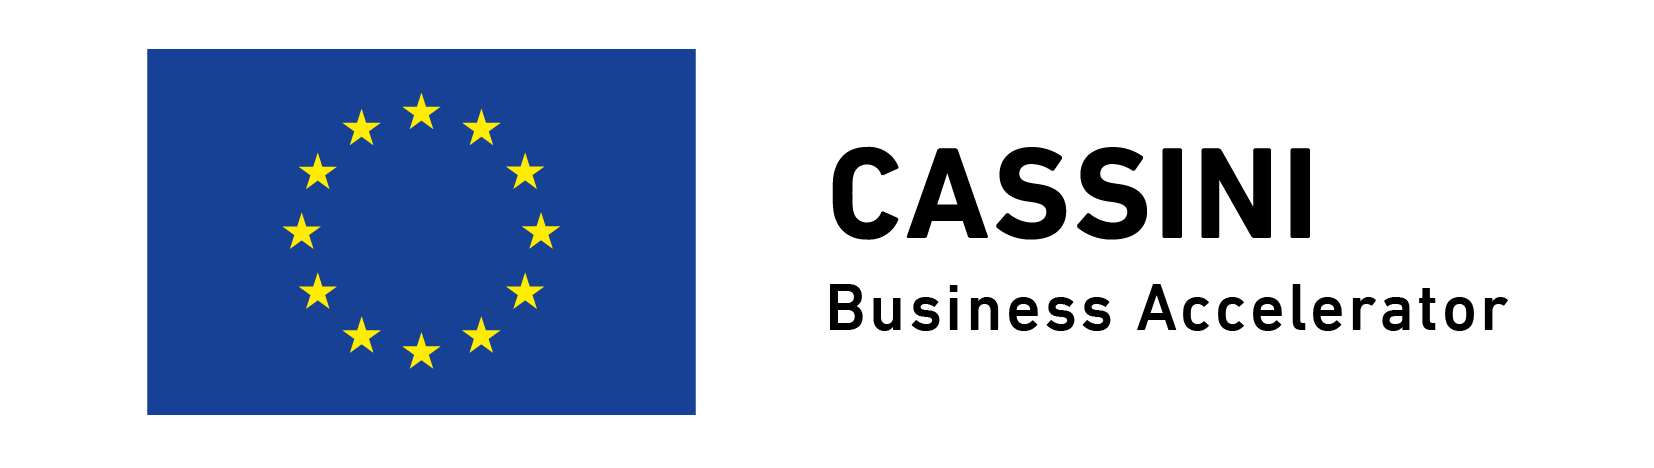 Cassani accelerator logo 